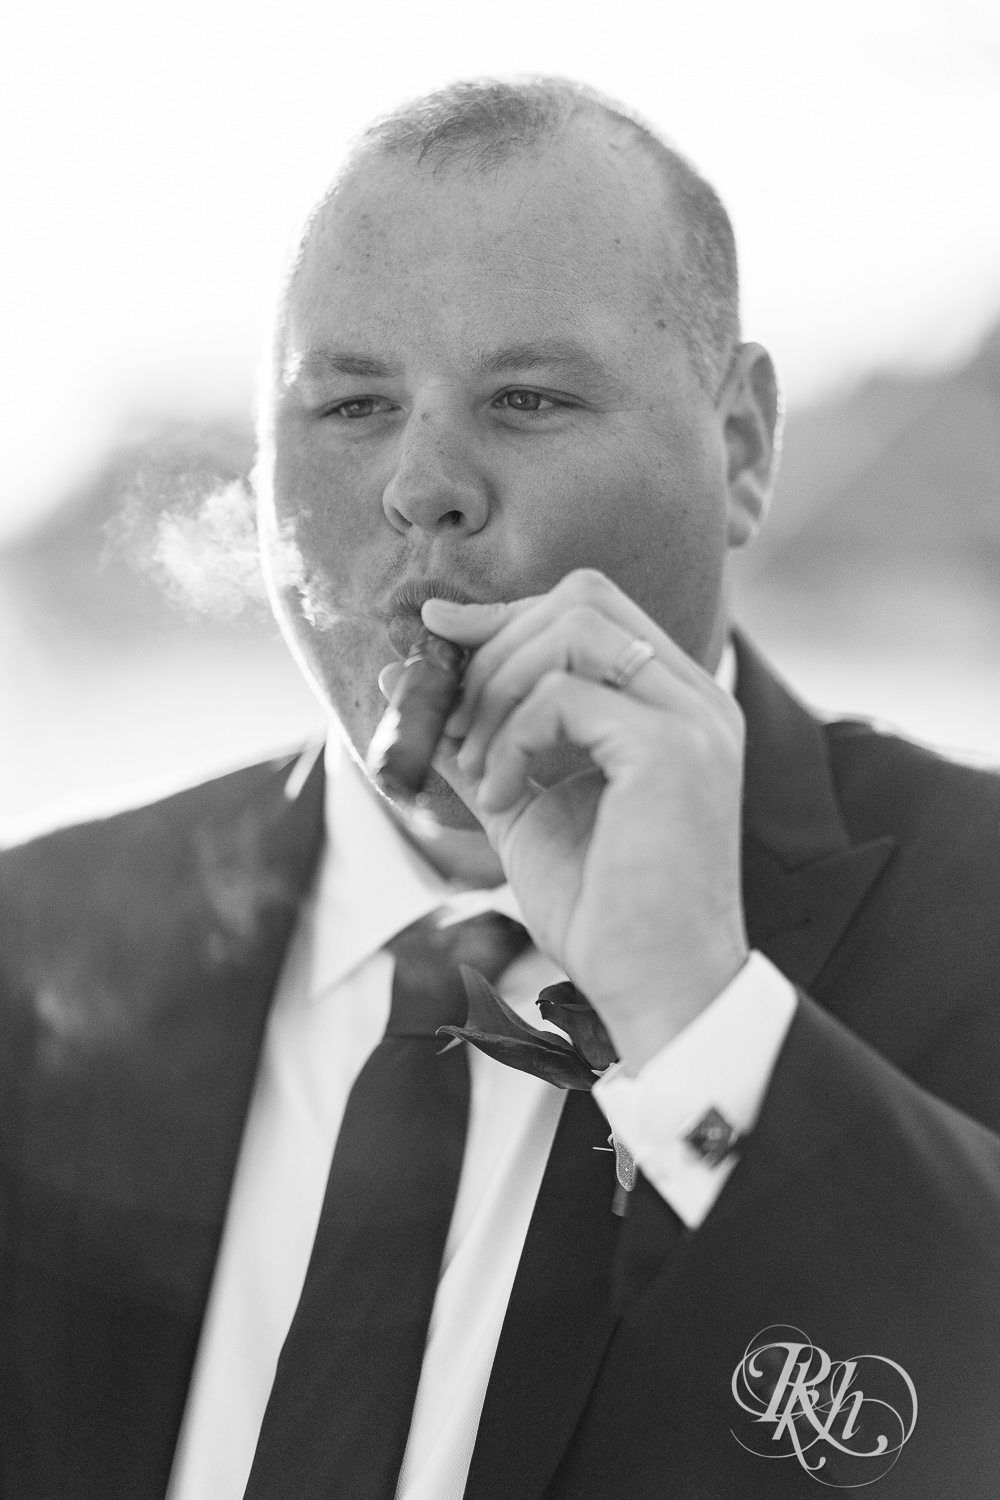 Groom smoking cigar at wedding at Grand Superior Lodge in Two Harbors, Minnesota.